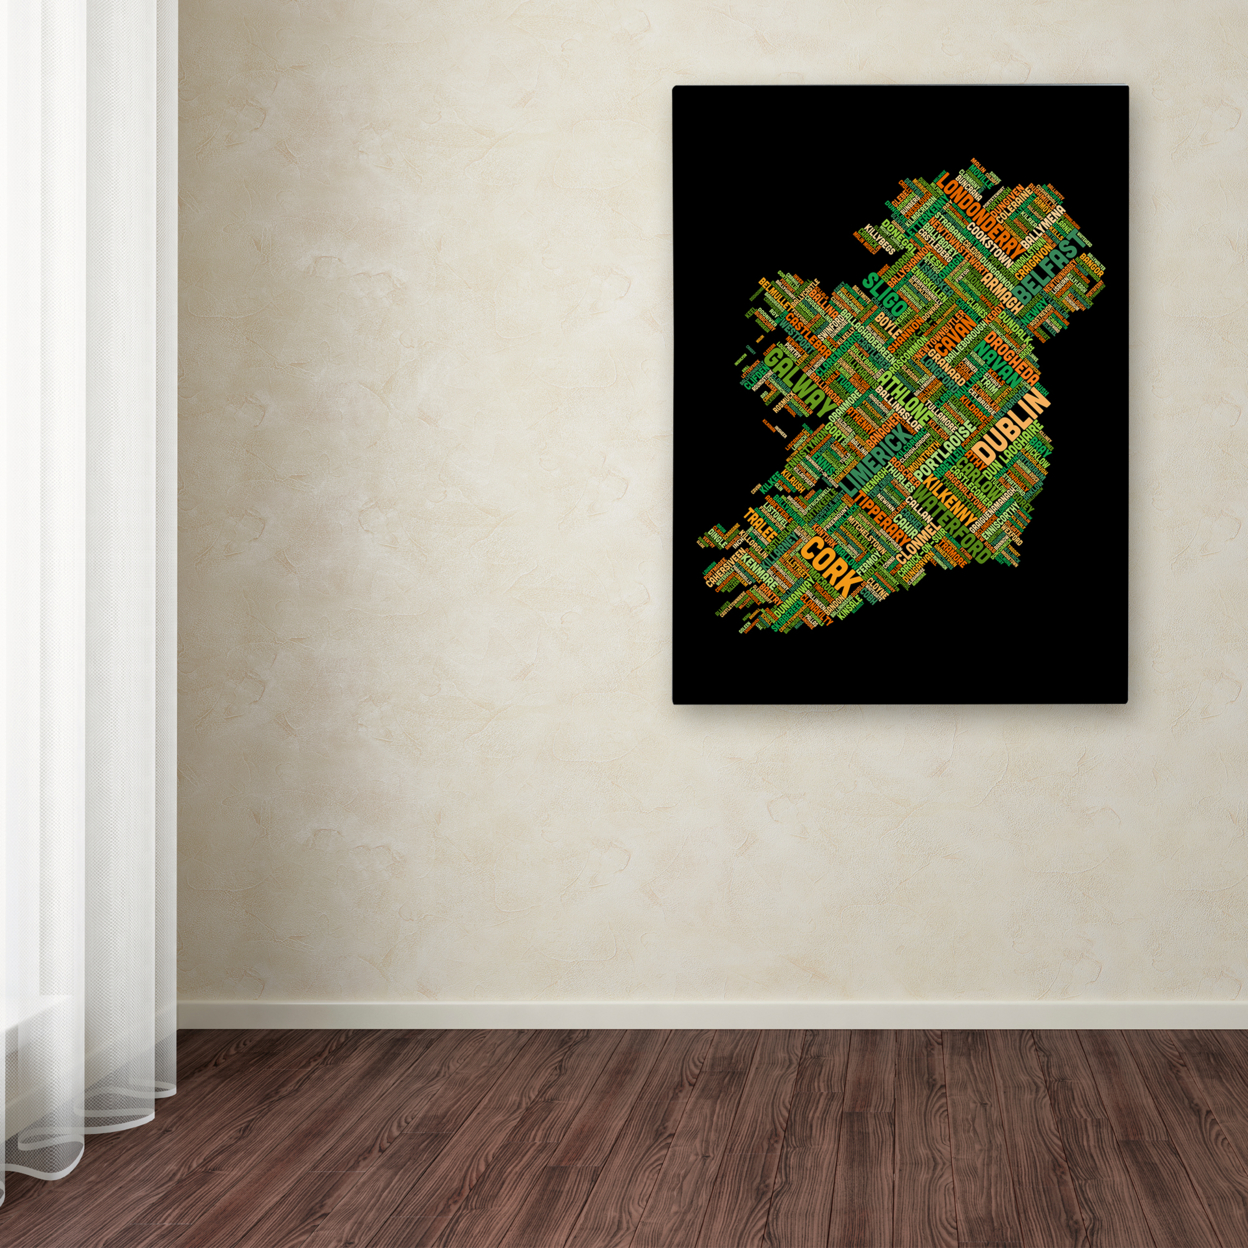 Michael Tompsett 'Ireland Eire City Text Map' Canvas Wall Art 35 X 47 Inches